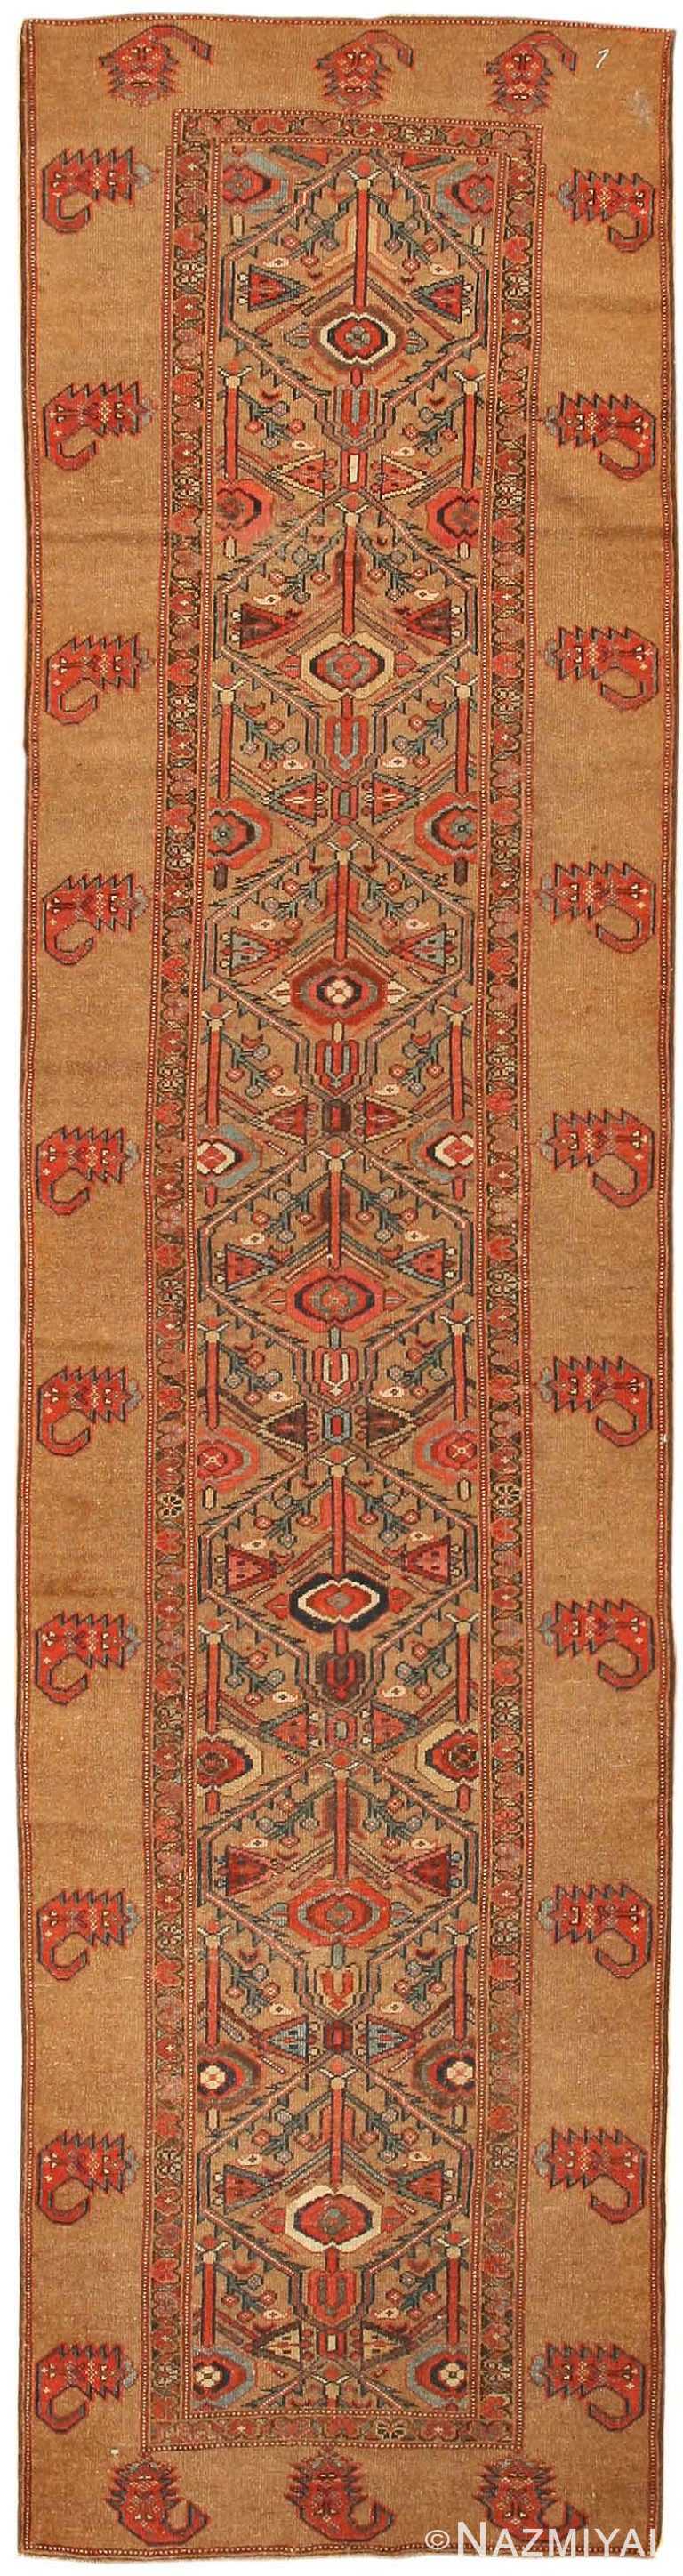 Antique Serab Persian Rug 43868 Nazmiyal